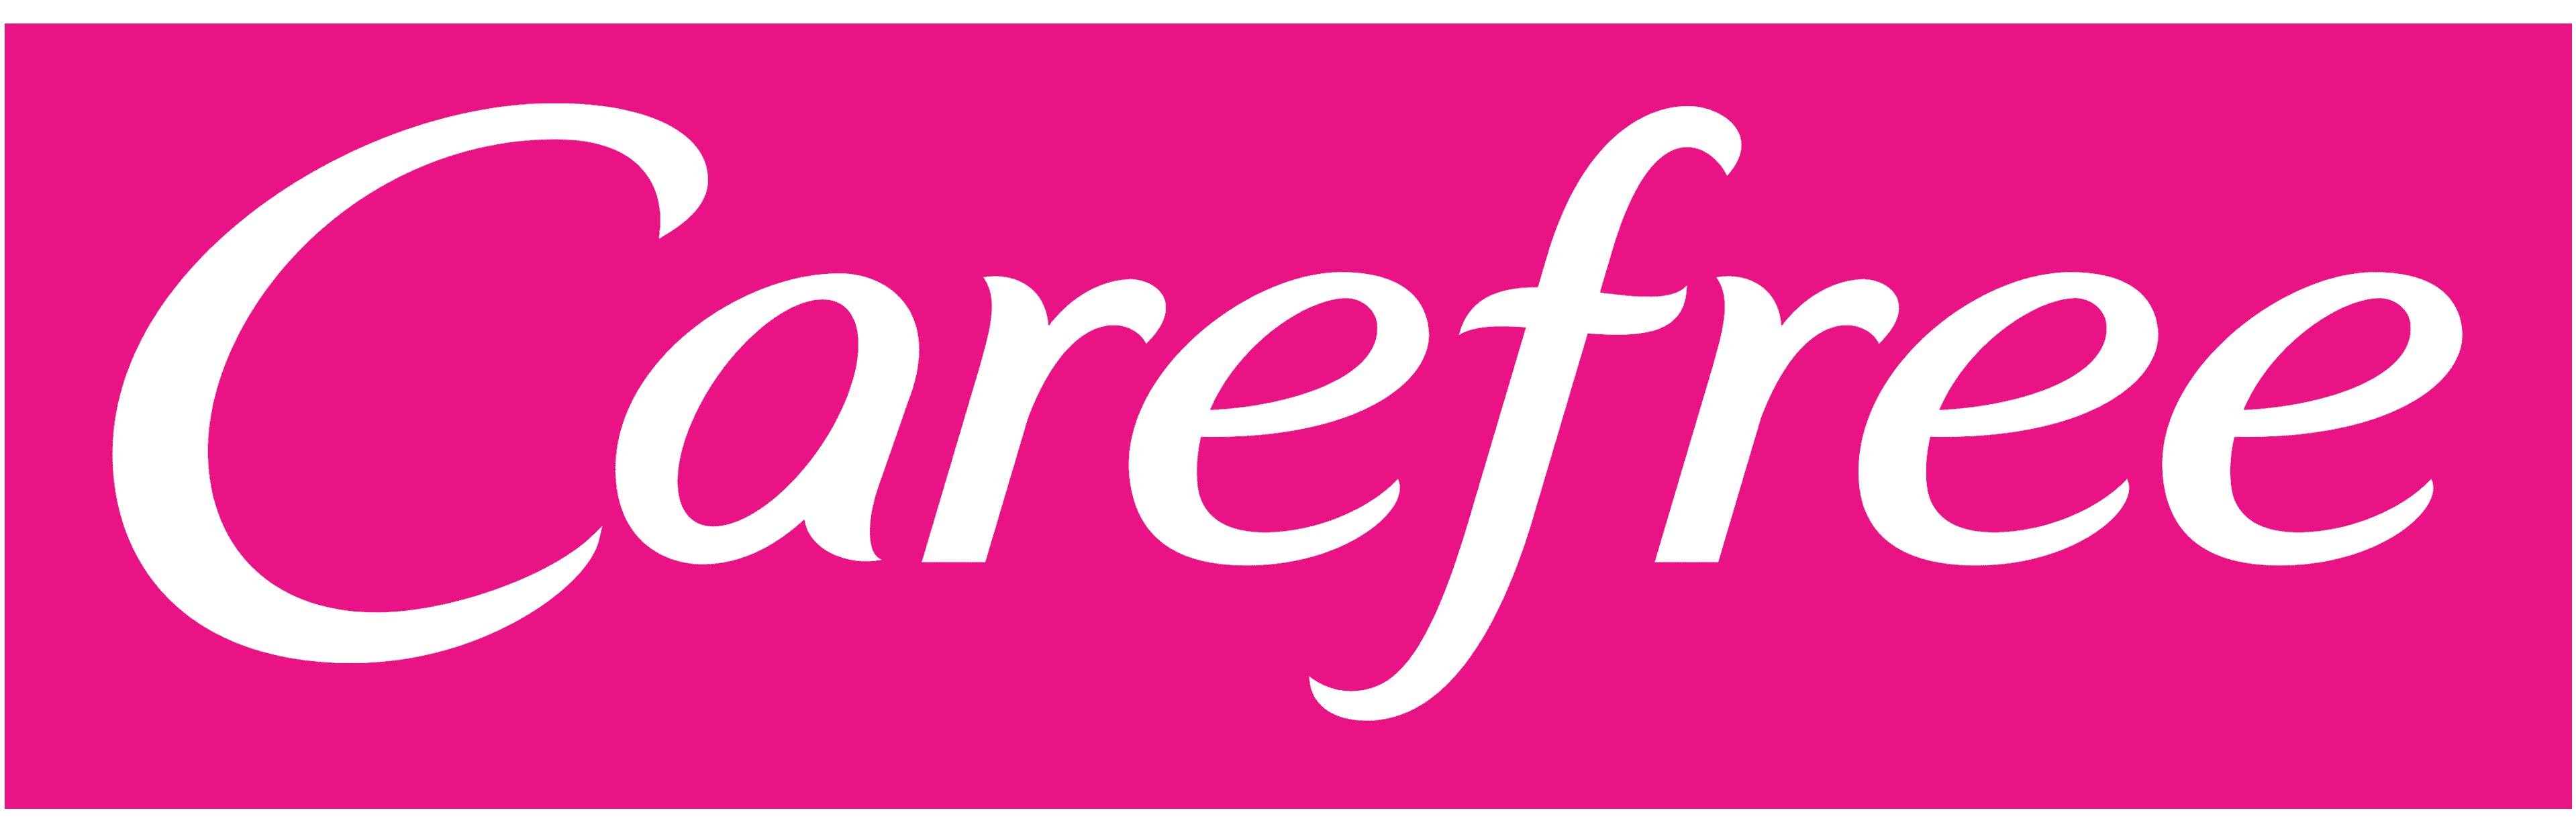 Carefree feminine hygiene brand logo